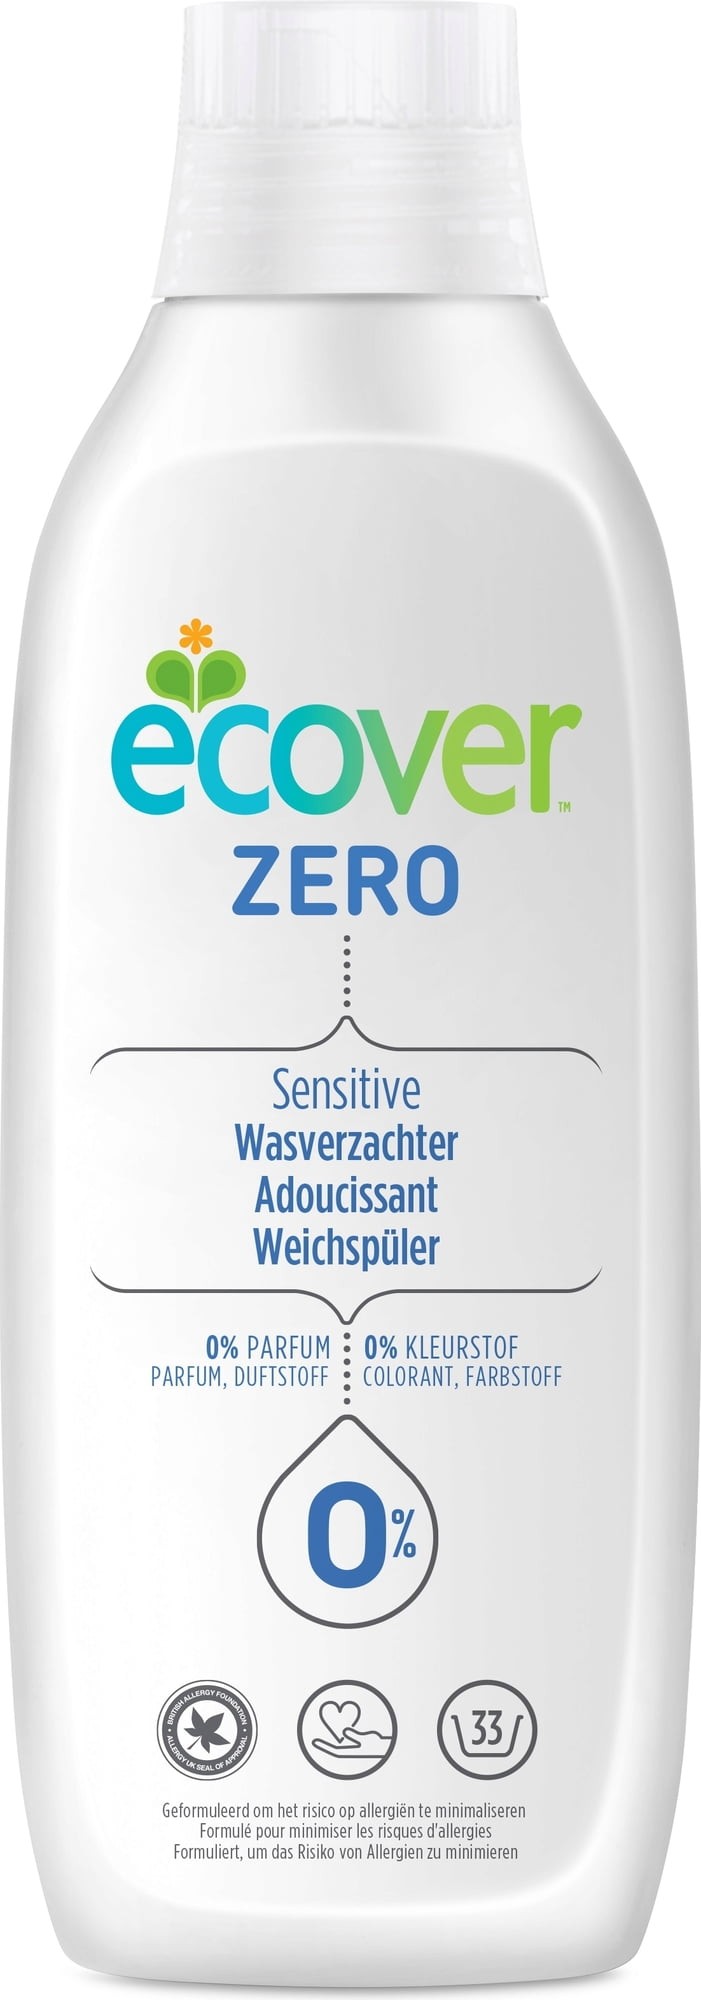 Image of Ecover Zero Sesitive Weichspüler (1000ml)